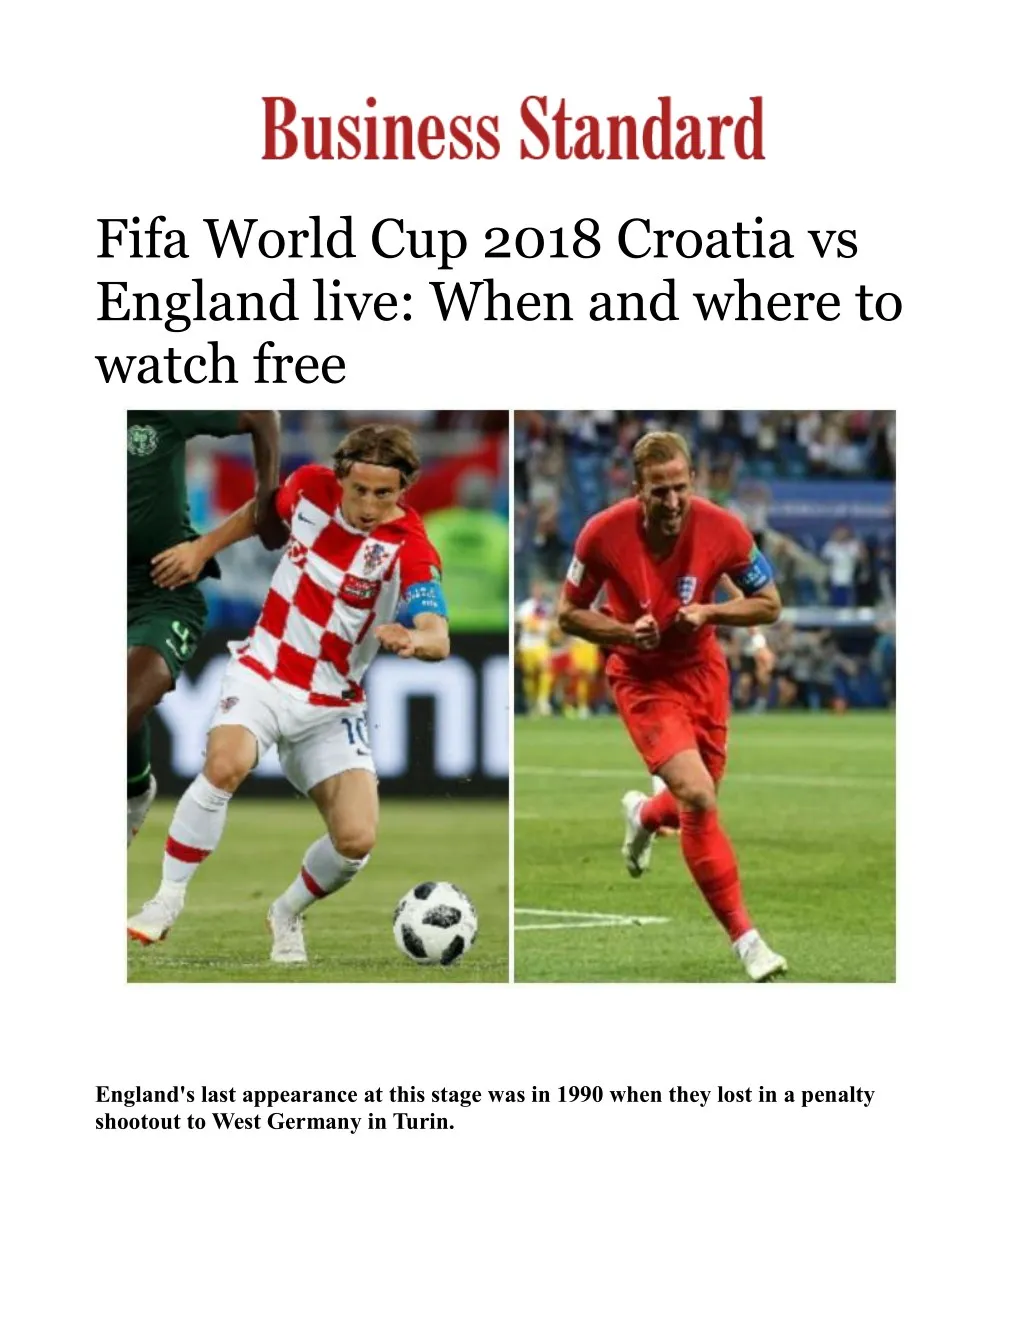 fifa world cup 2018 croatia vs england live when